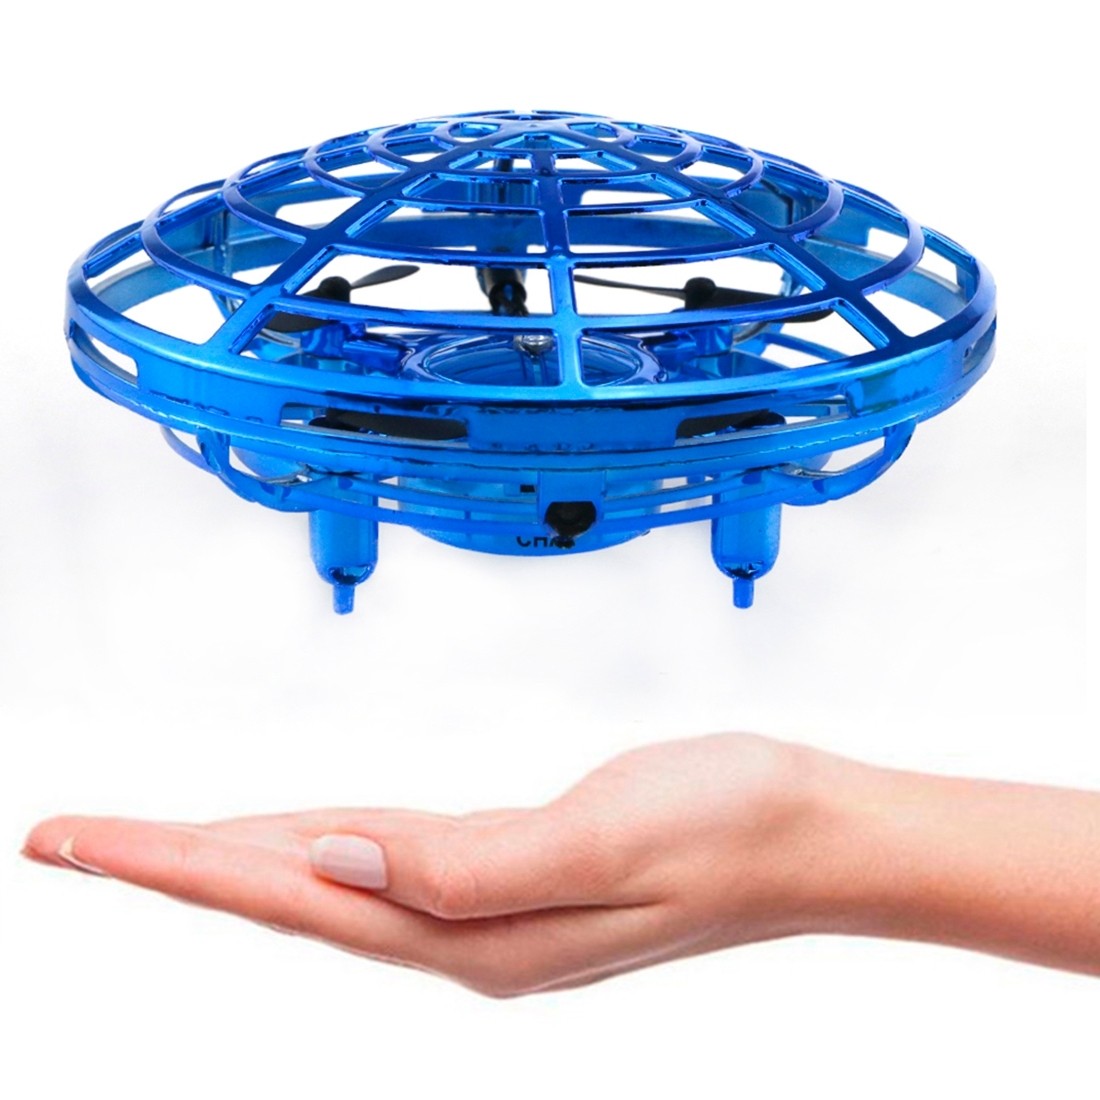 Mini UFO Hand Controlled Quadcopter (Blue)